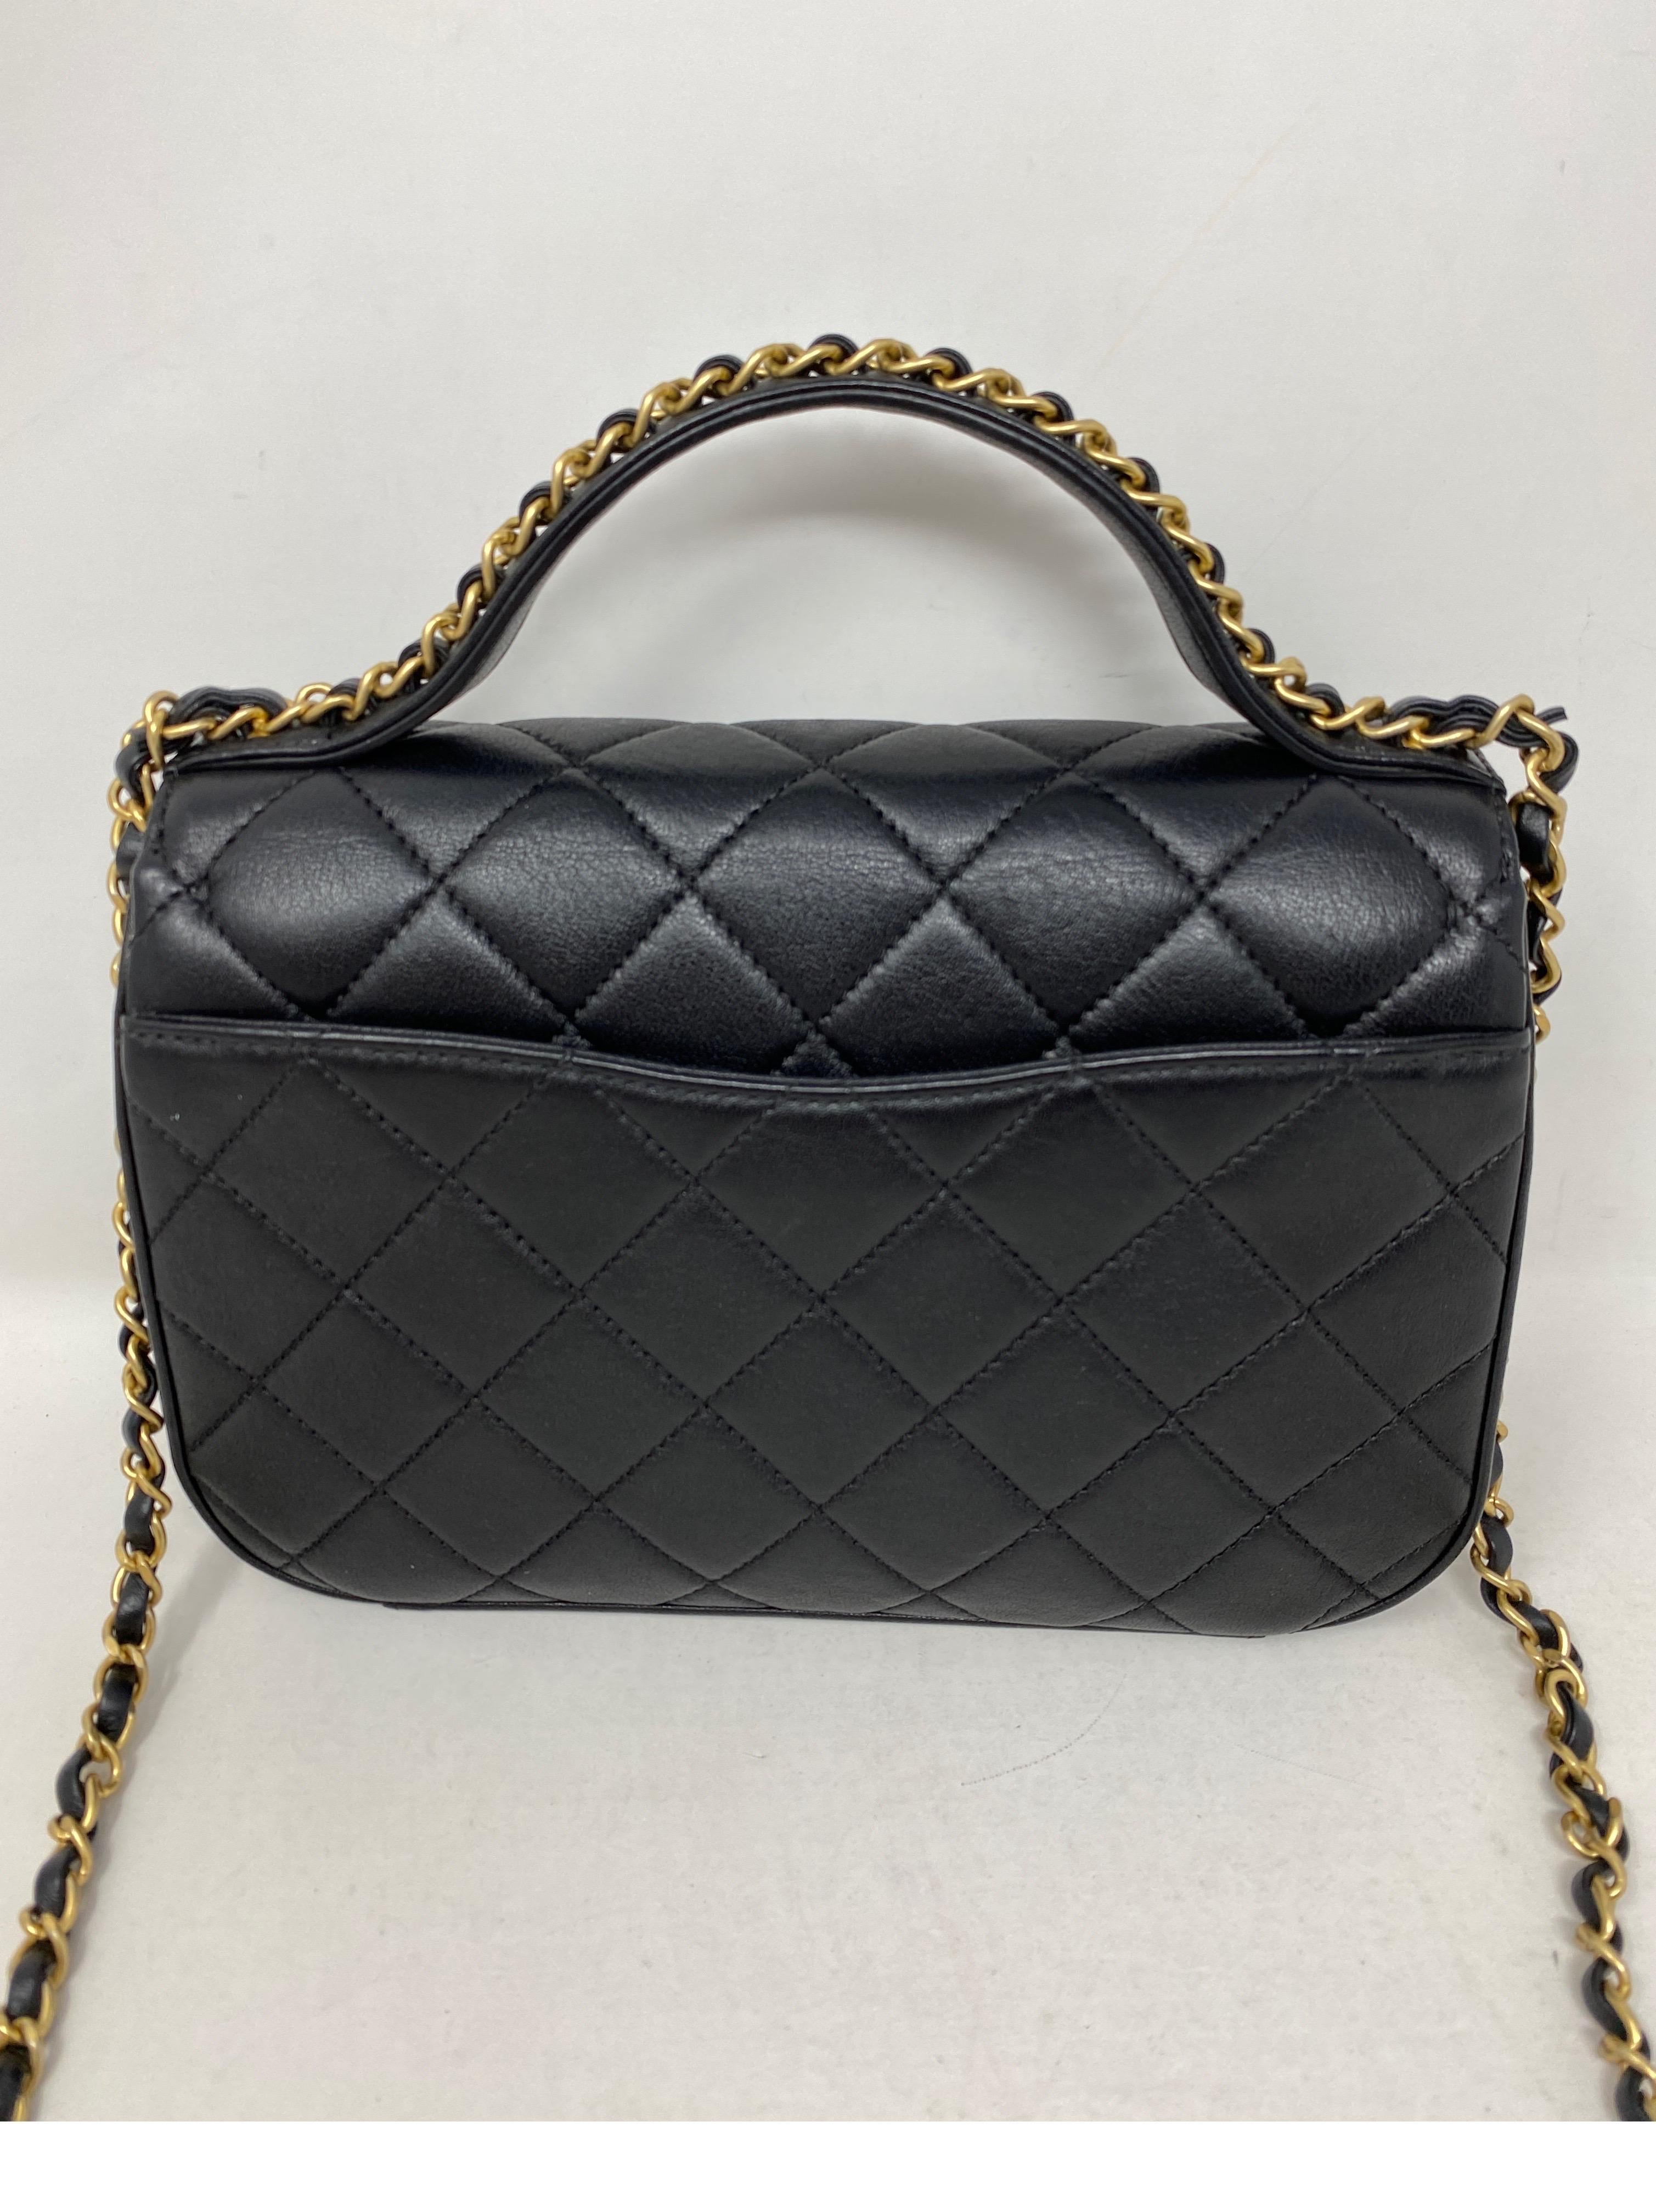 Women's or Men's Chanel Top Handle Black Chain Bag